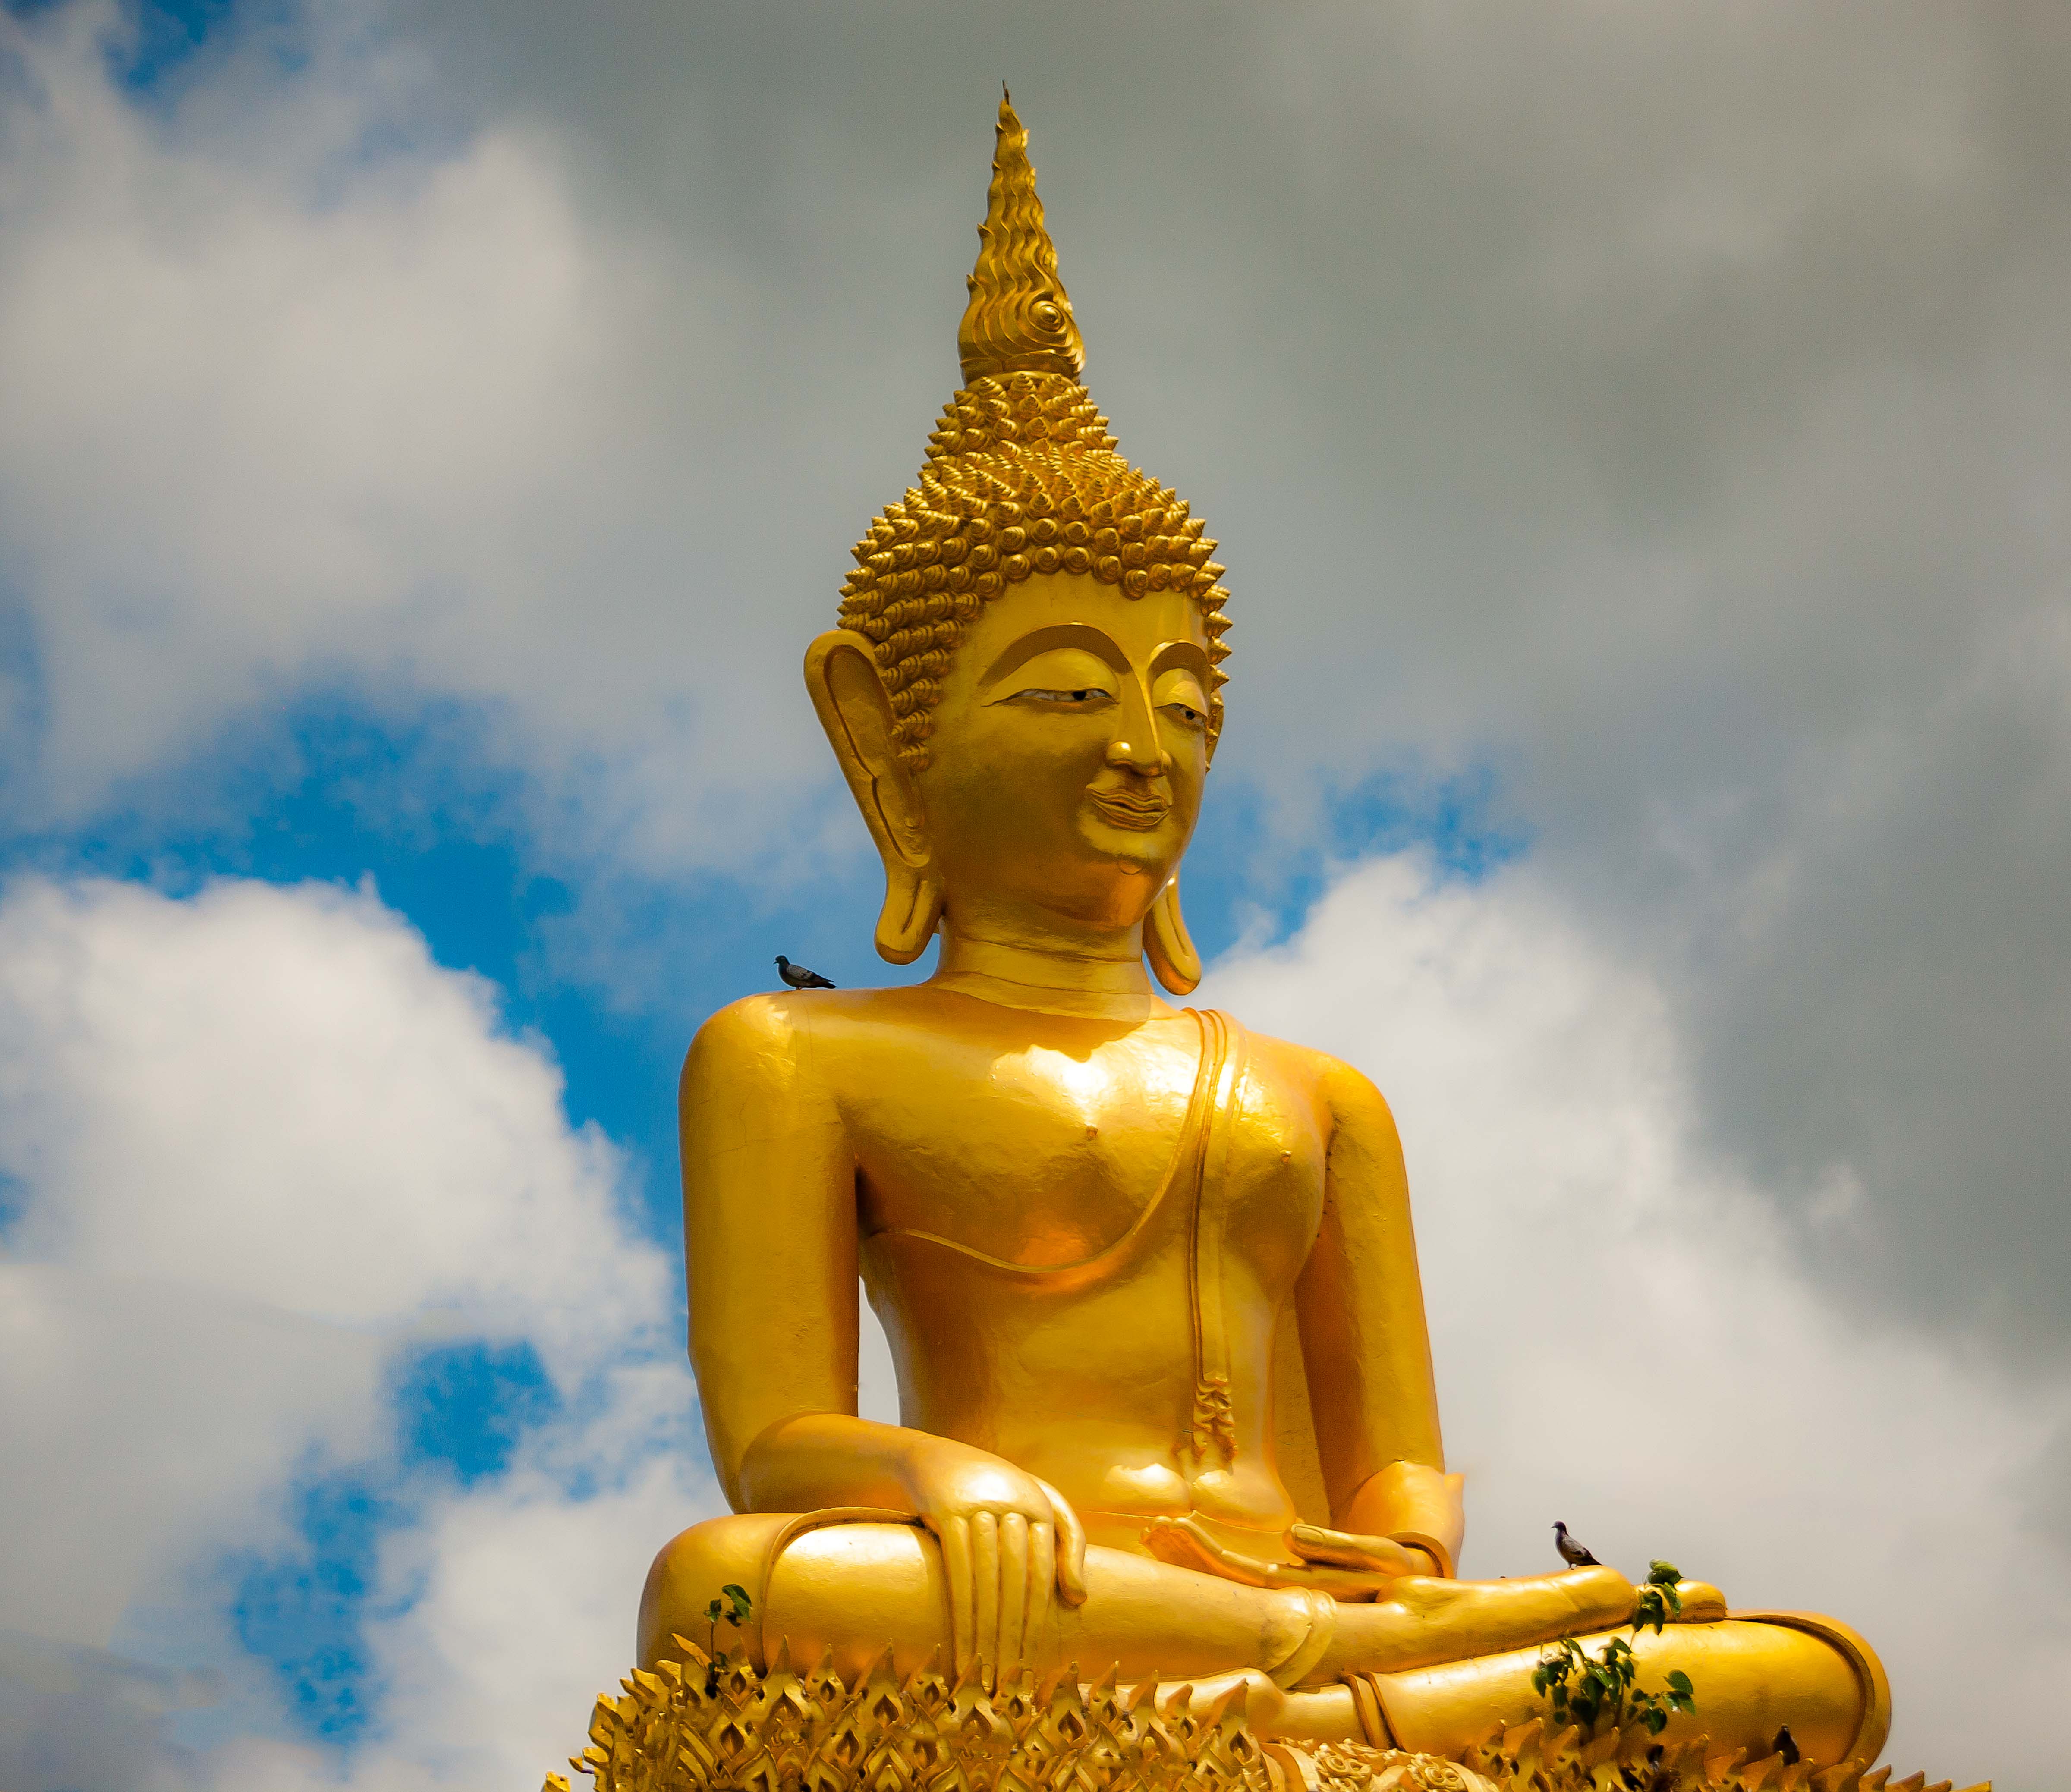 Thailand, Lopburi Prov, Buddha In Clouds, 2008, IMG 4296